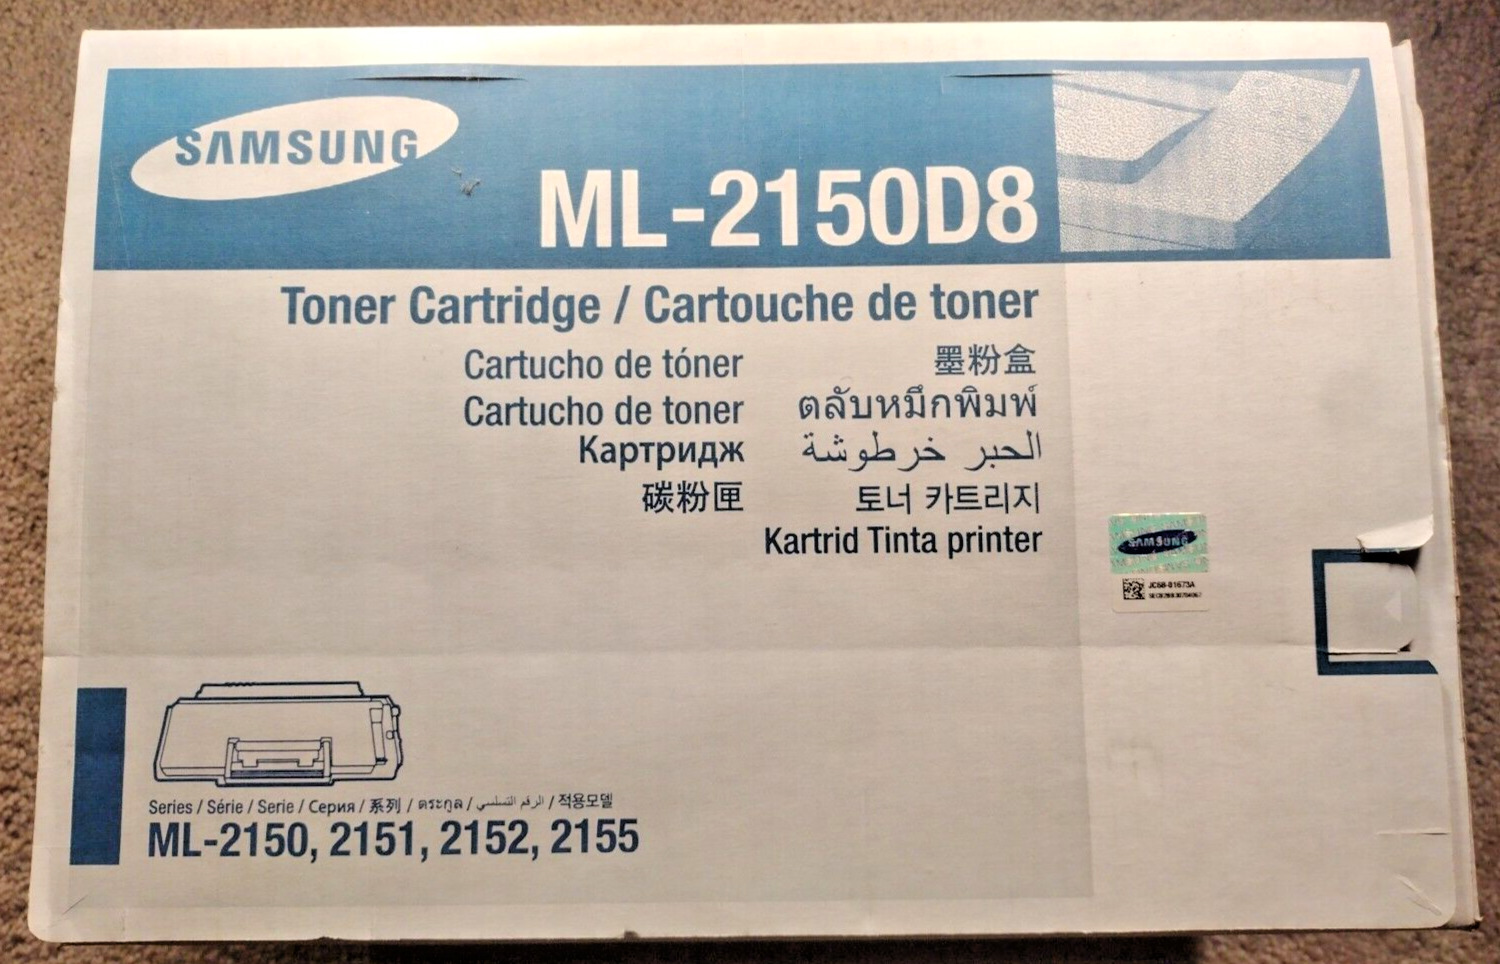 Genuine Samsung Tonner Cartridge ML-2150D8 New